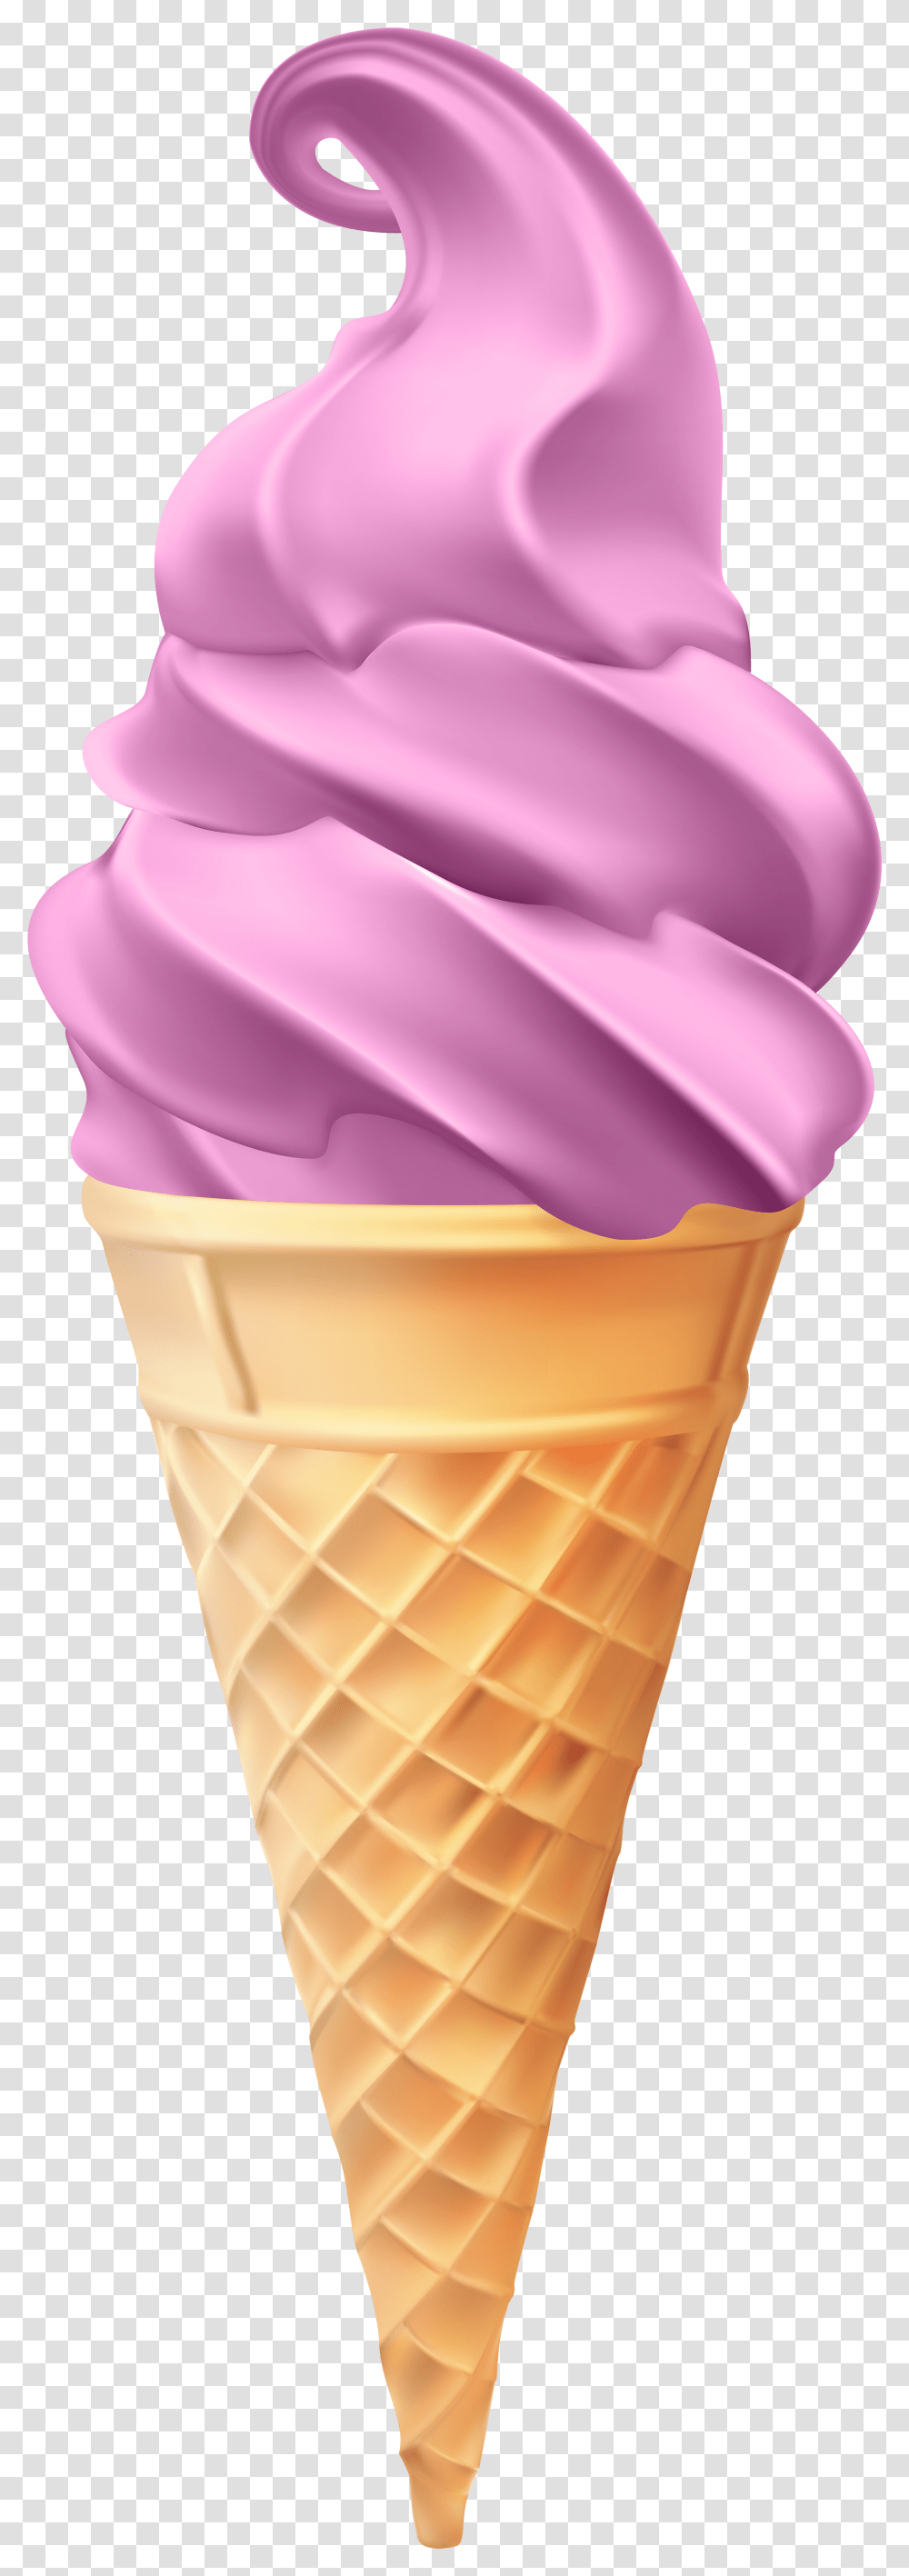 Ice Cream Cone Clip Art Pink Ice Cream Free, Dessert, Food, Creme, Wedding Cake Transparent Png